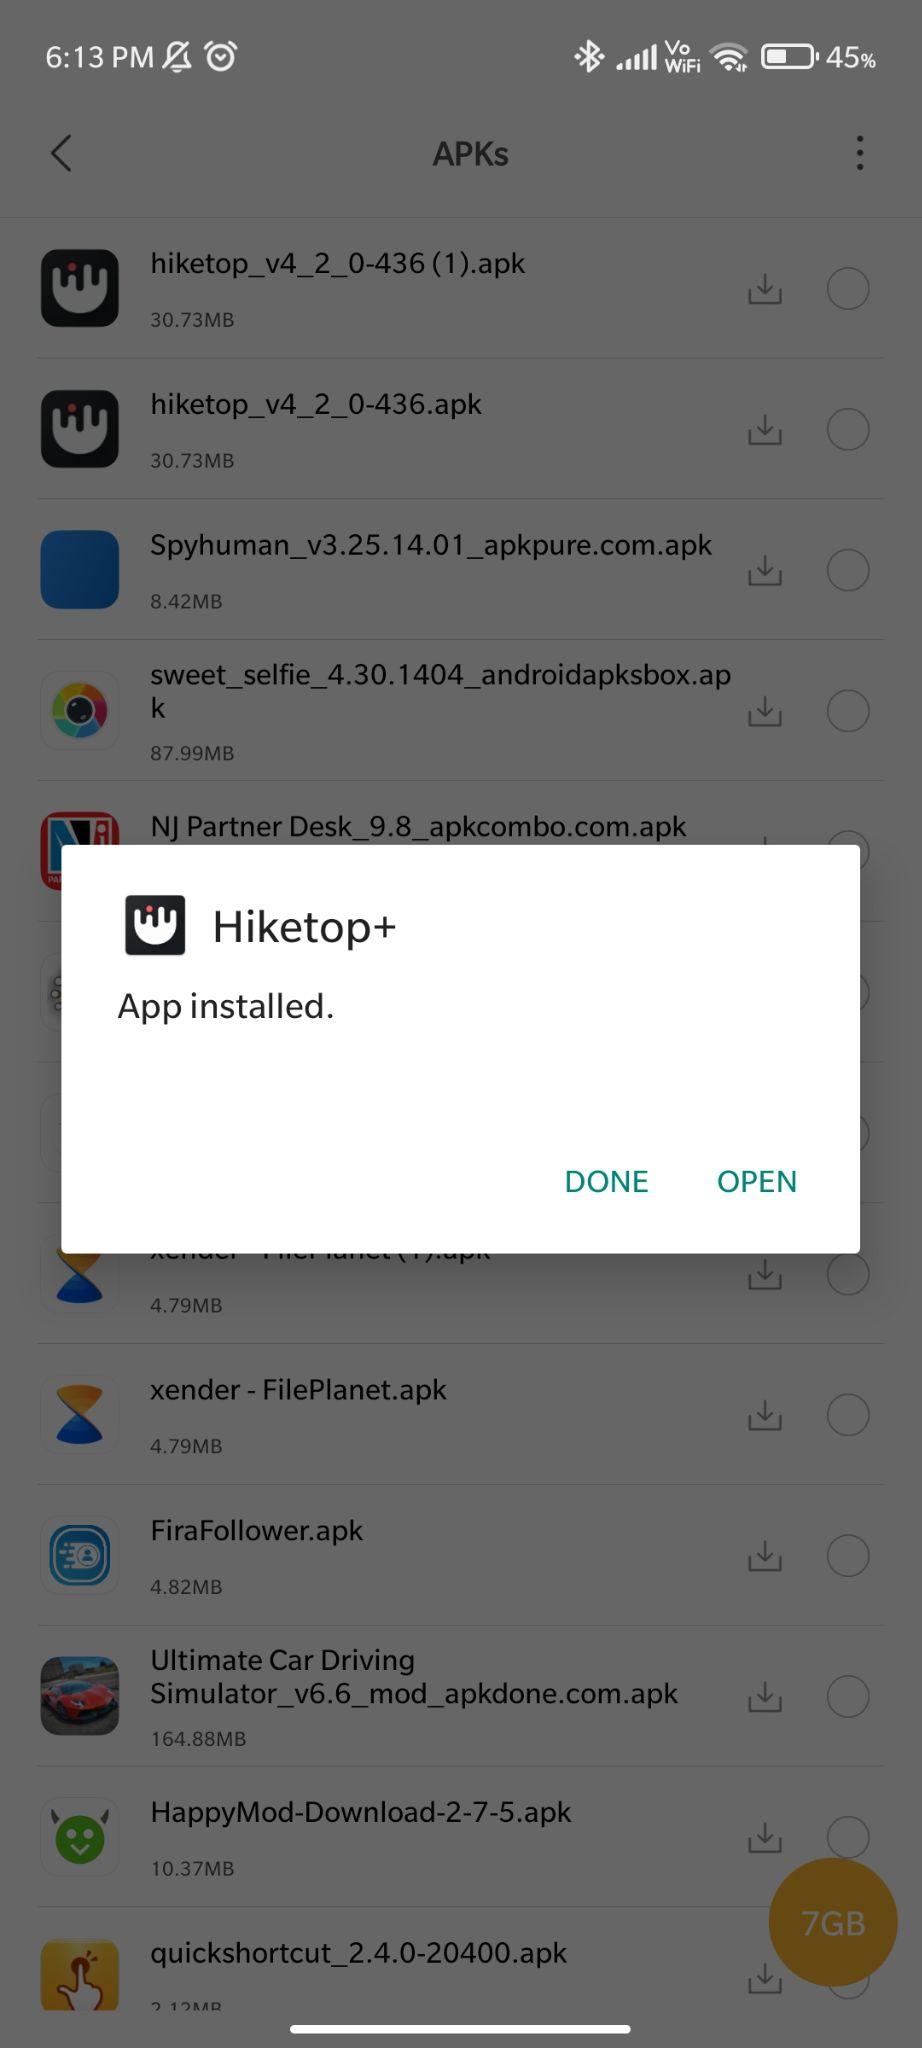 hiketop+ apk installed